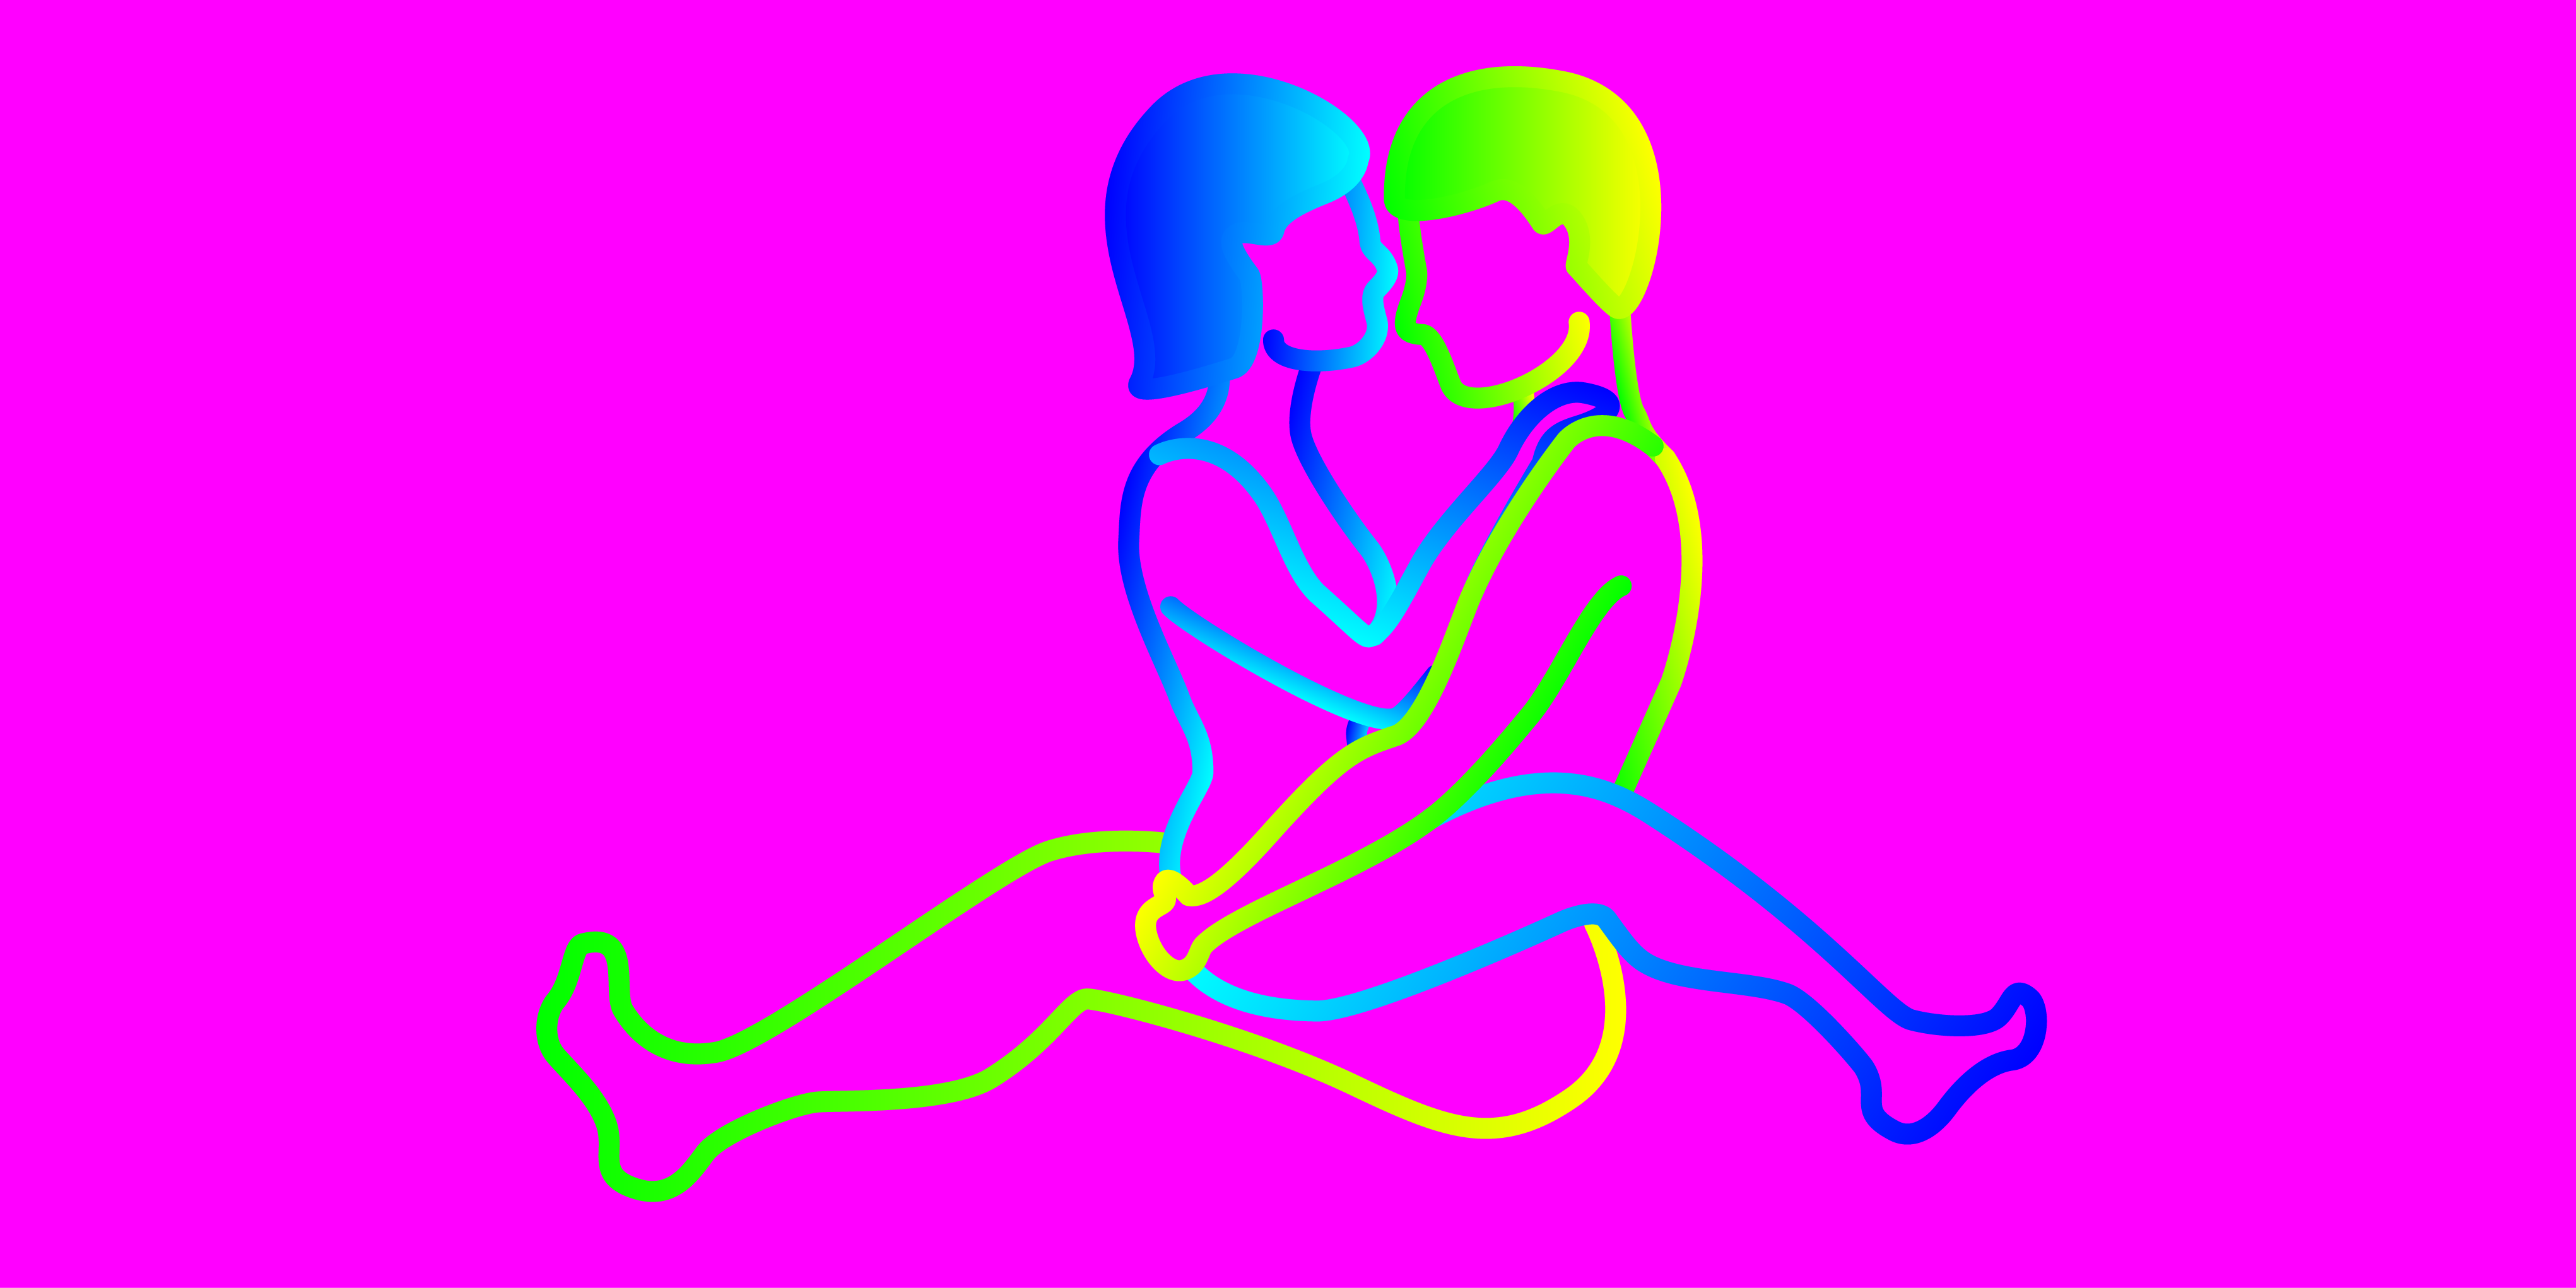 Visual sex position